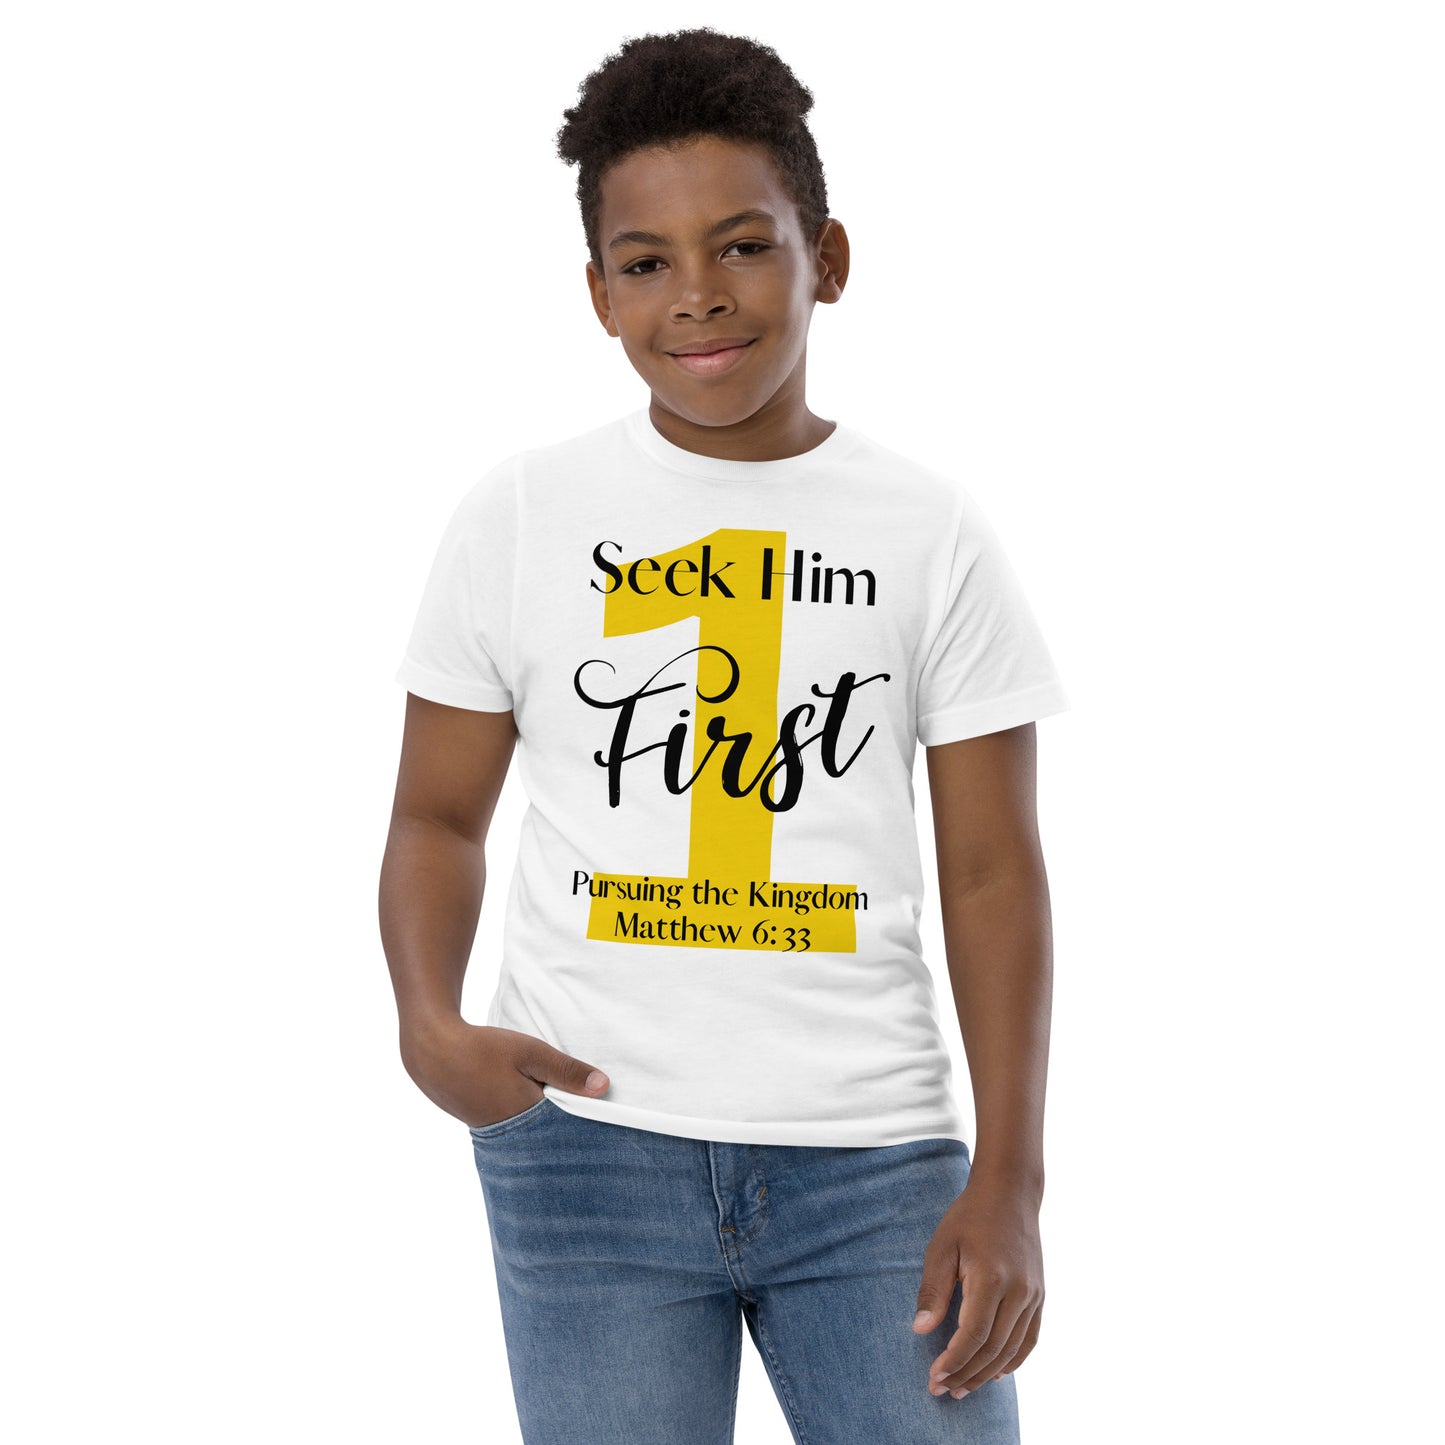 Seek Him First Youth (White)